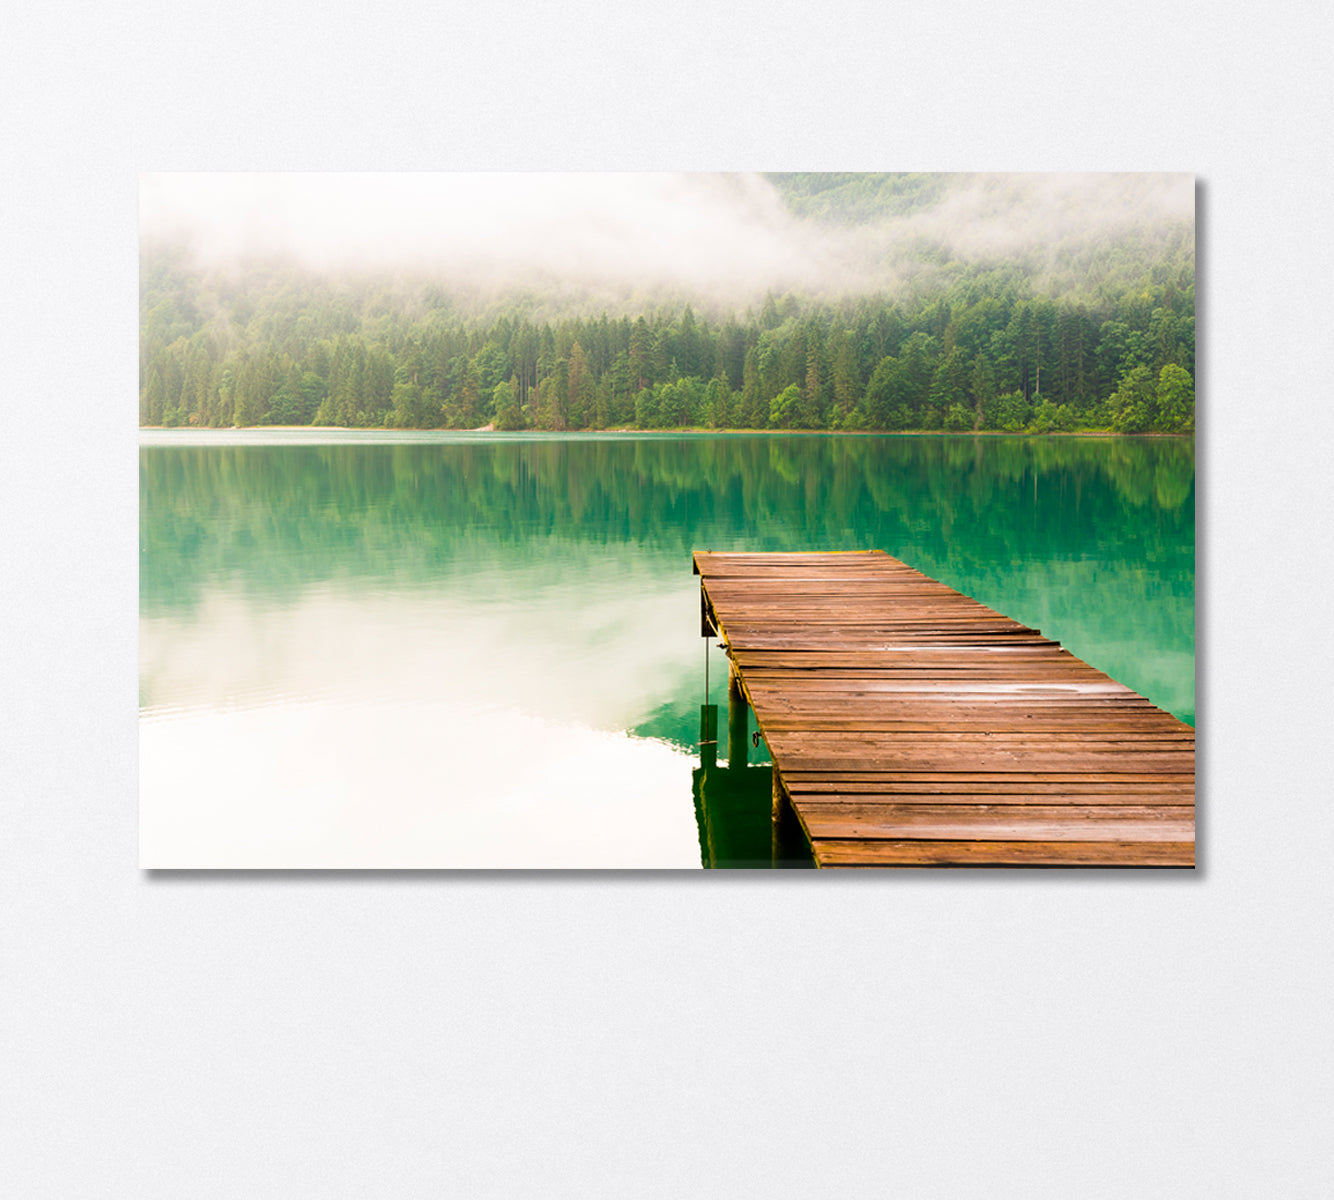 Foggy Morning Pier at Lake Canvas Print-Canvas Print-CetArt-1 Panel-24x16 inches-CetArt